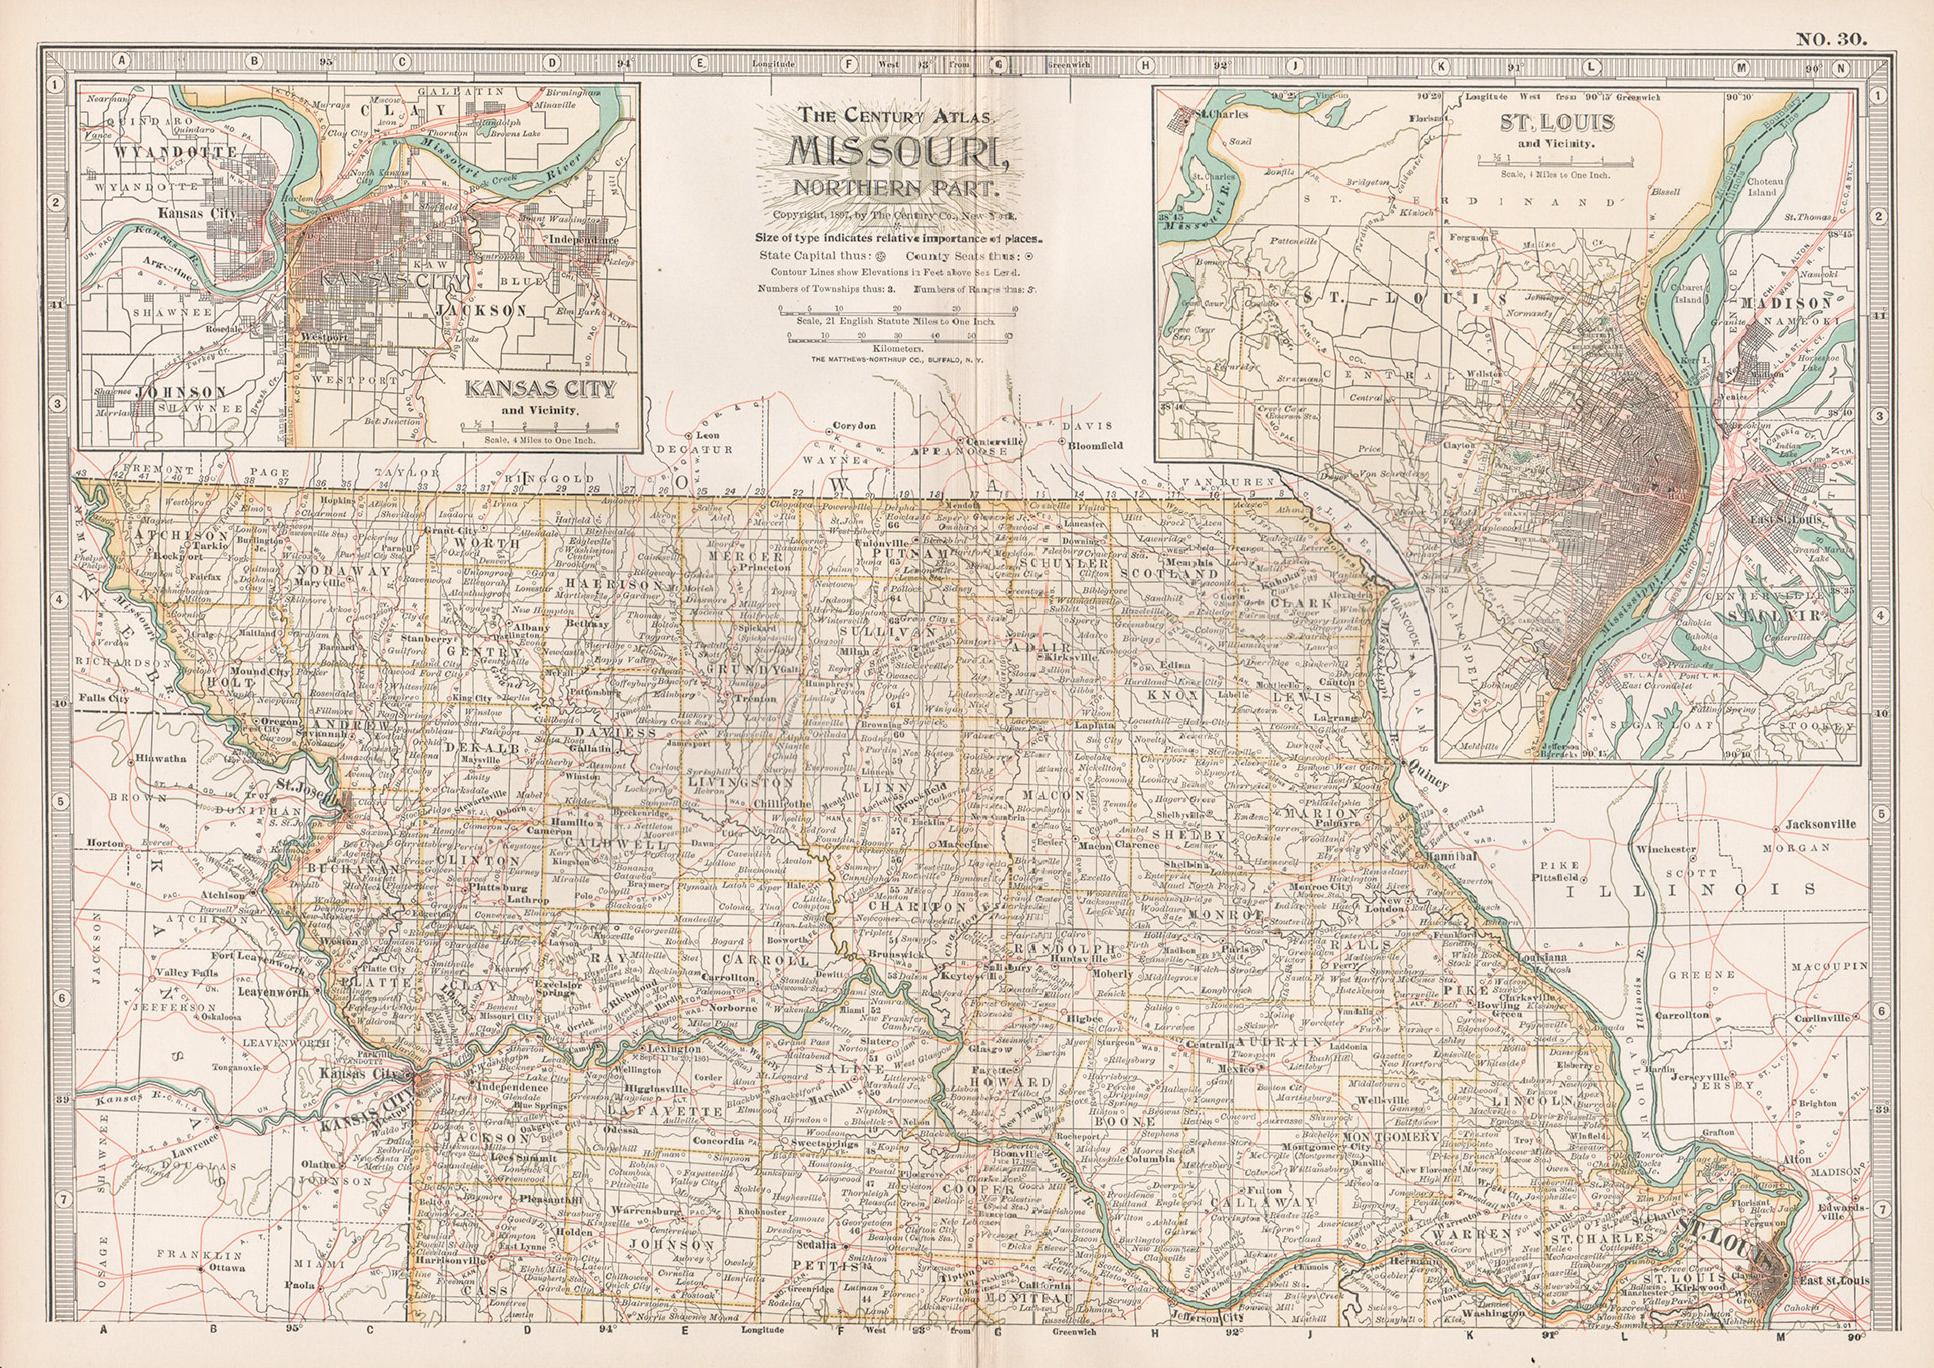 Unknown Print - Missouri. Northern Part. USA. Century Atlas state antique vintage map